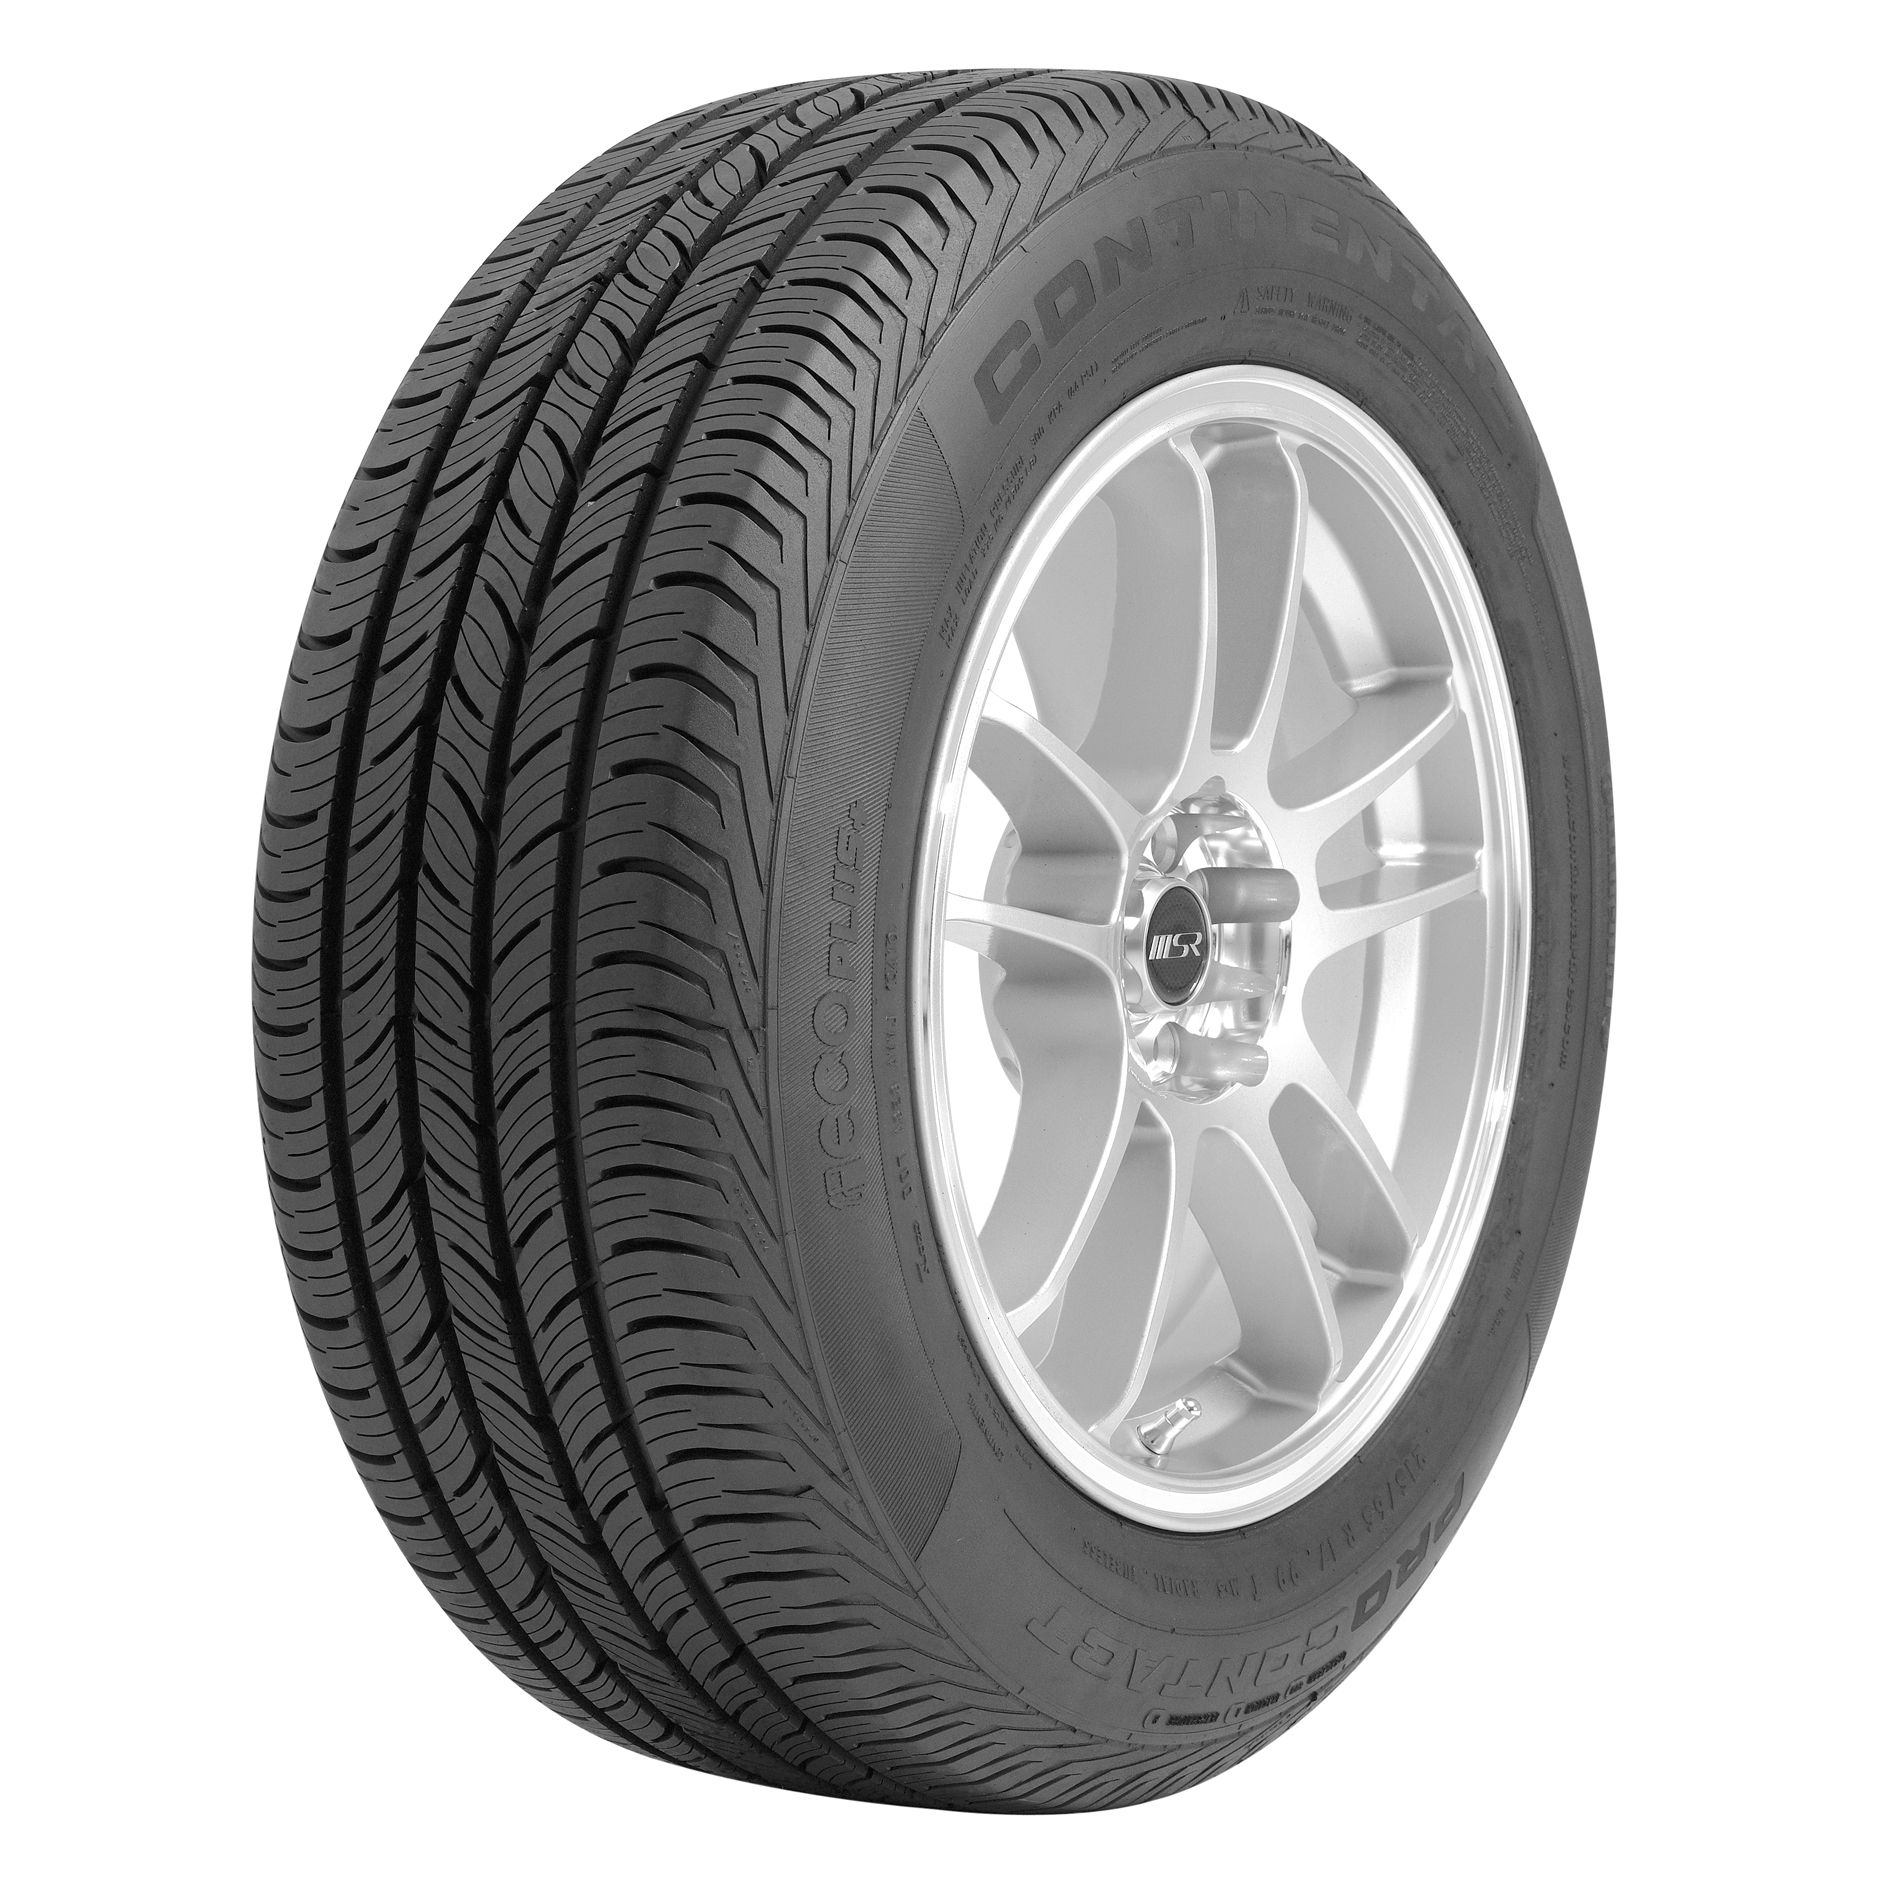 Continental Pro Contact Eco Plus - 225/50R18 95T BW - All-Season Tire